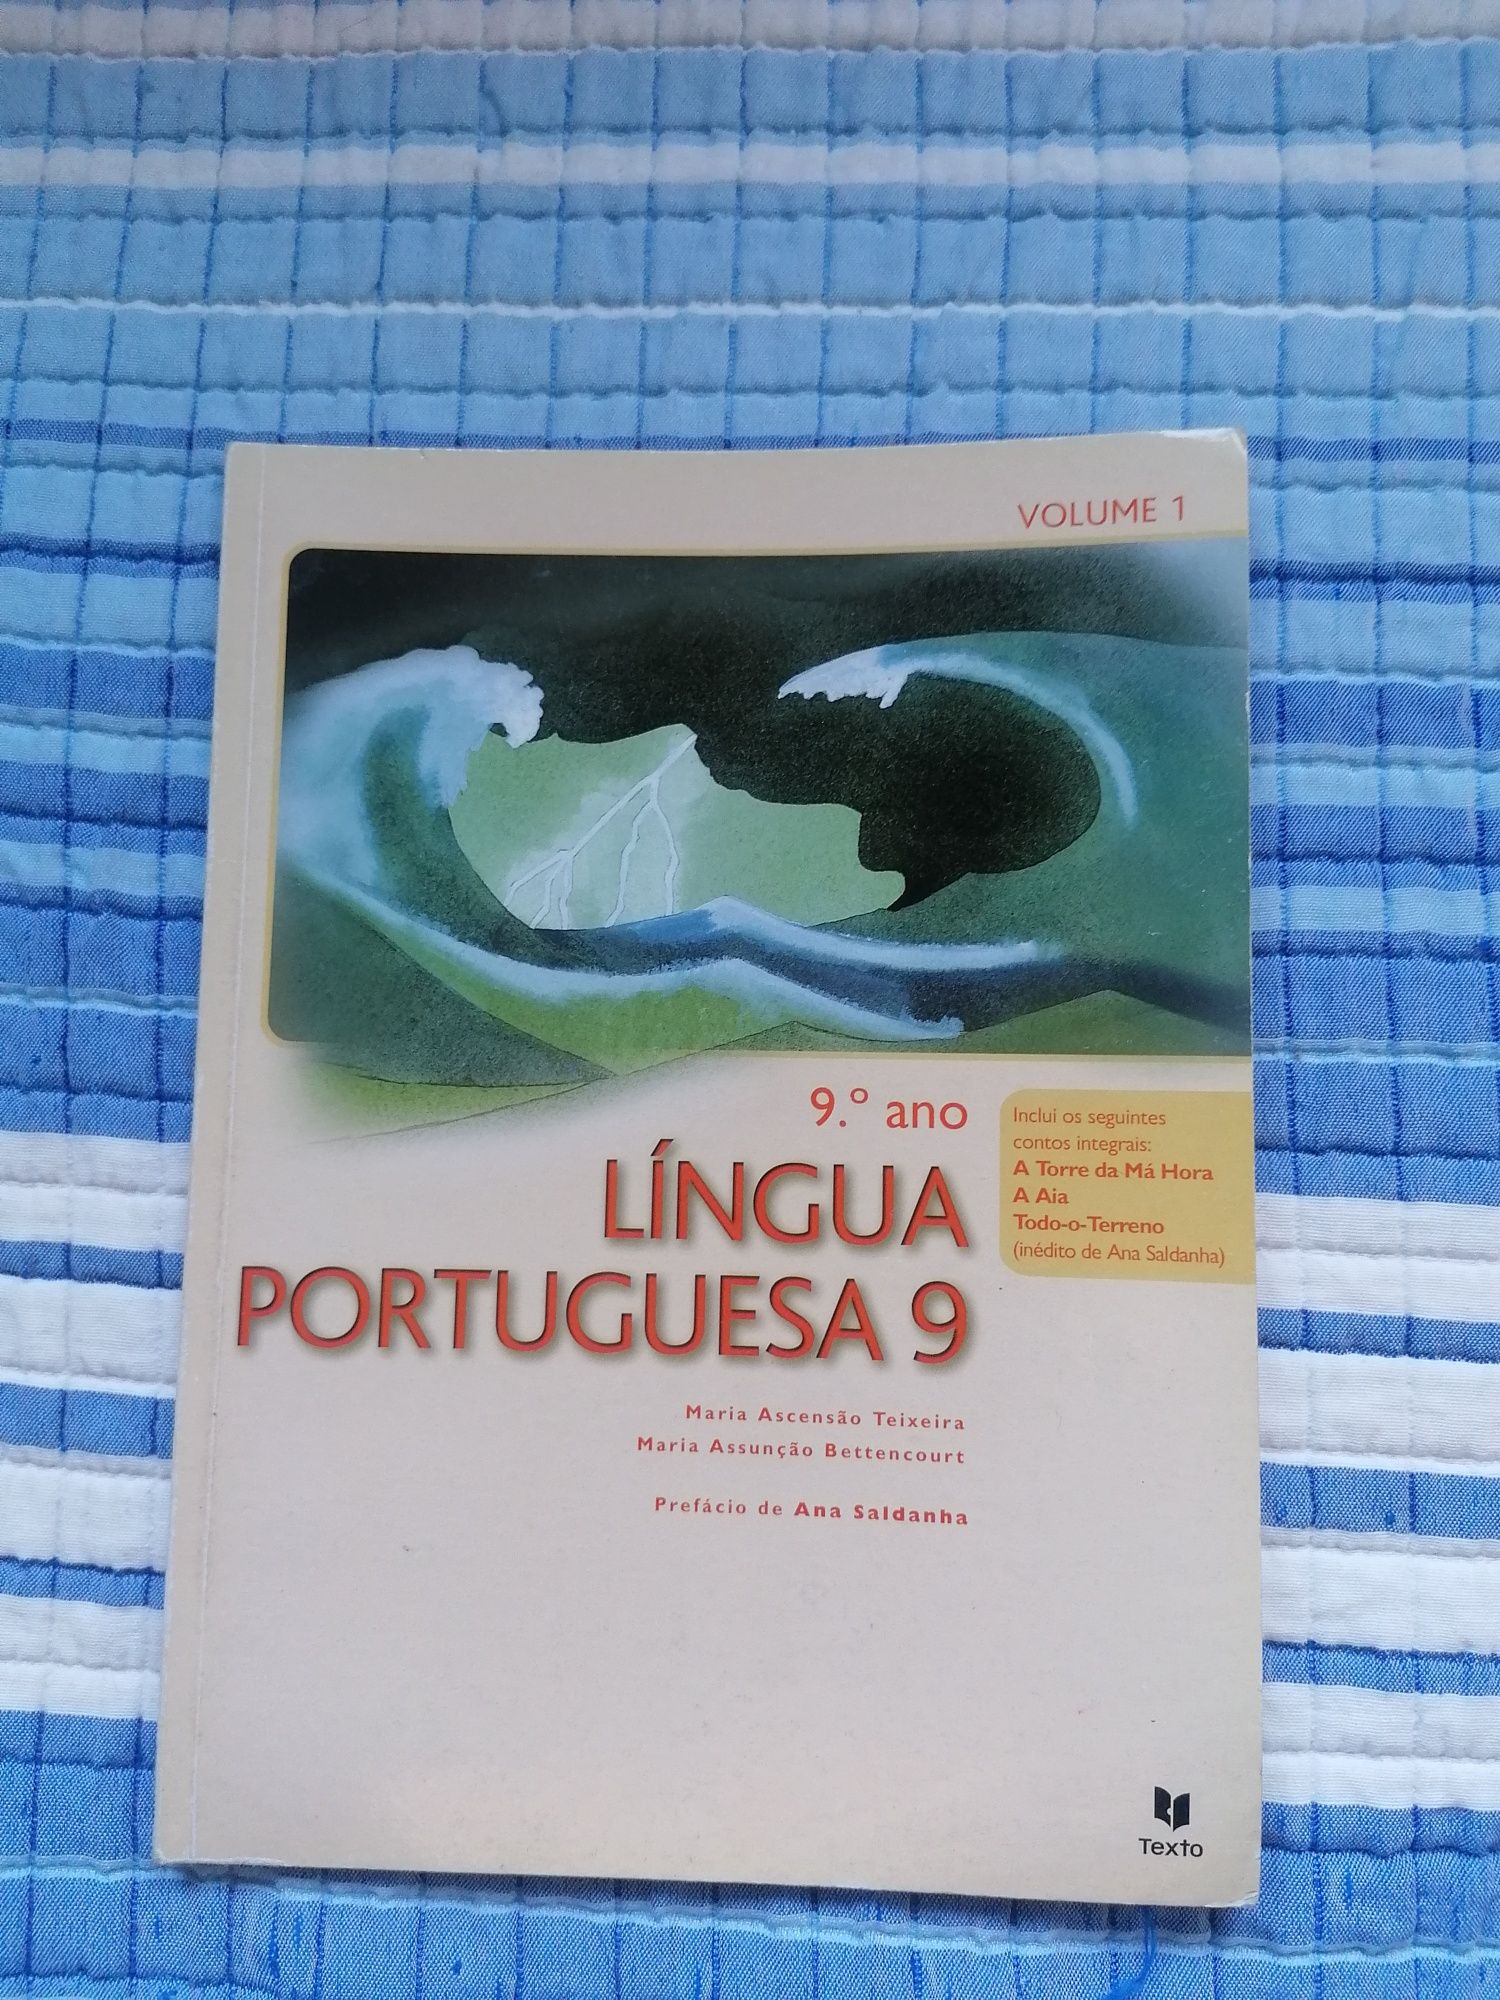 Livros Língua Portuguesa 9° ano+caderno atividades